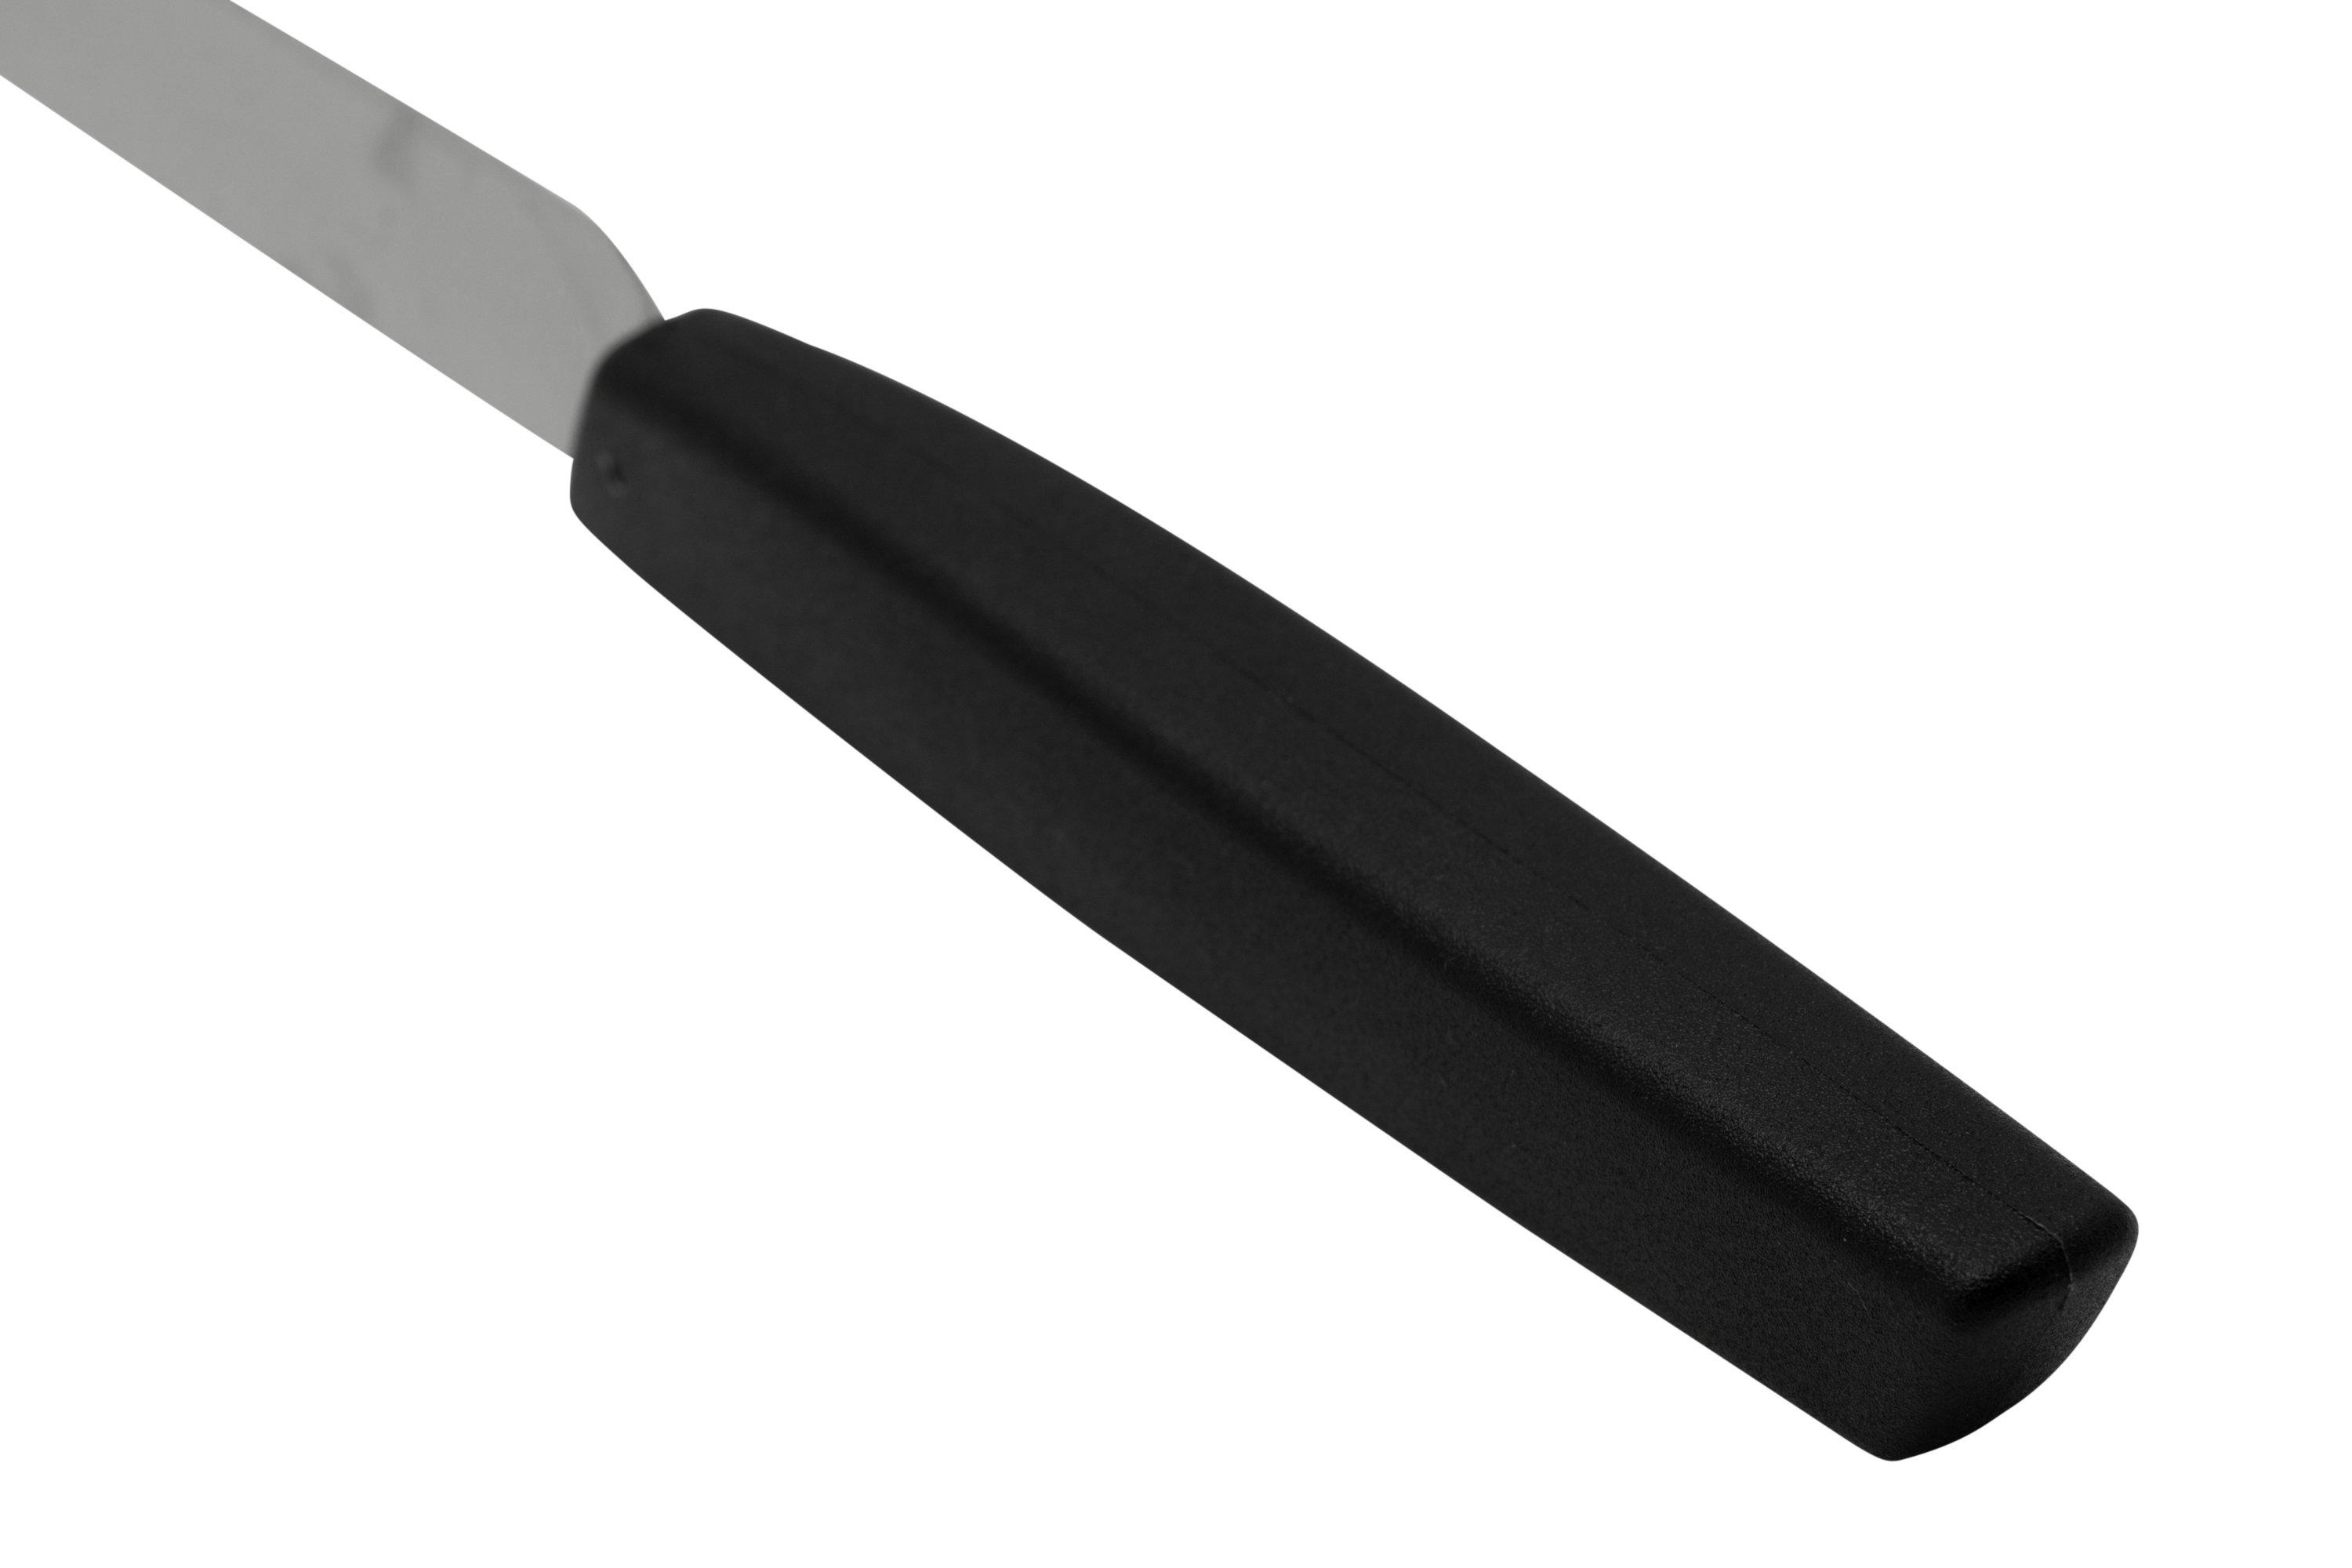 Victorinox Couteau d'office Swiss Modern en noir - 6.9003.10